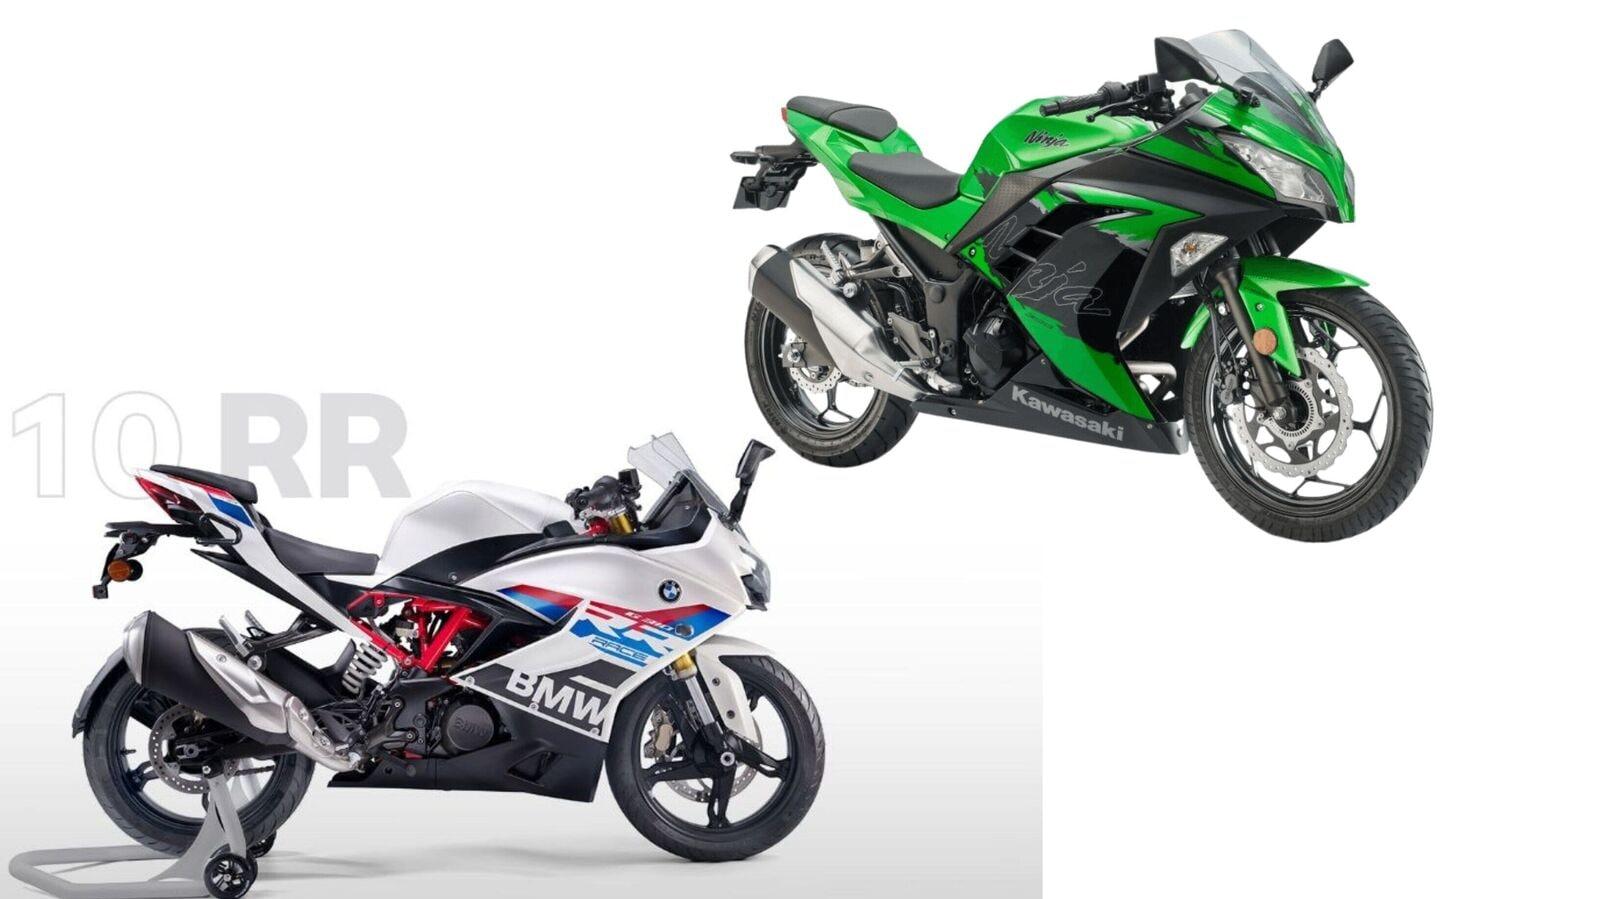 Bmw G Rr Vs Kawasaki Ninja Which Sportbike Should You Buy